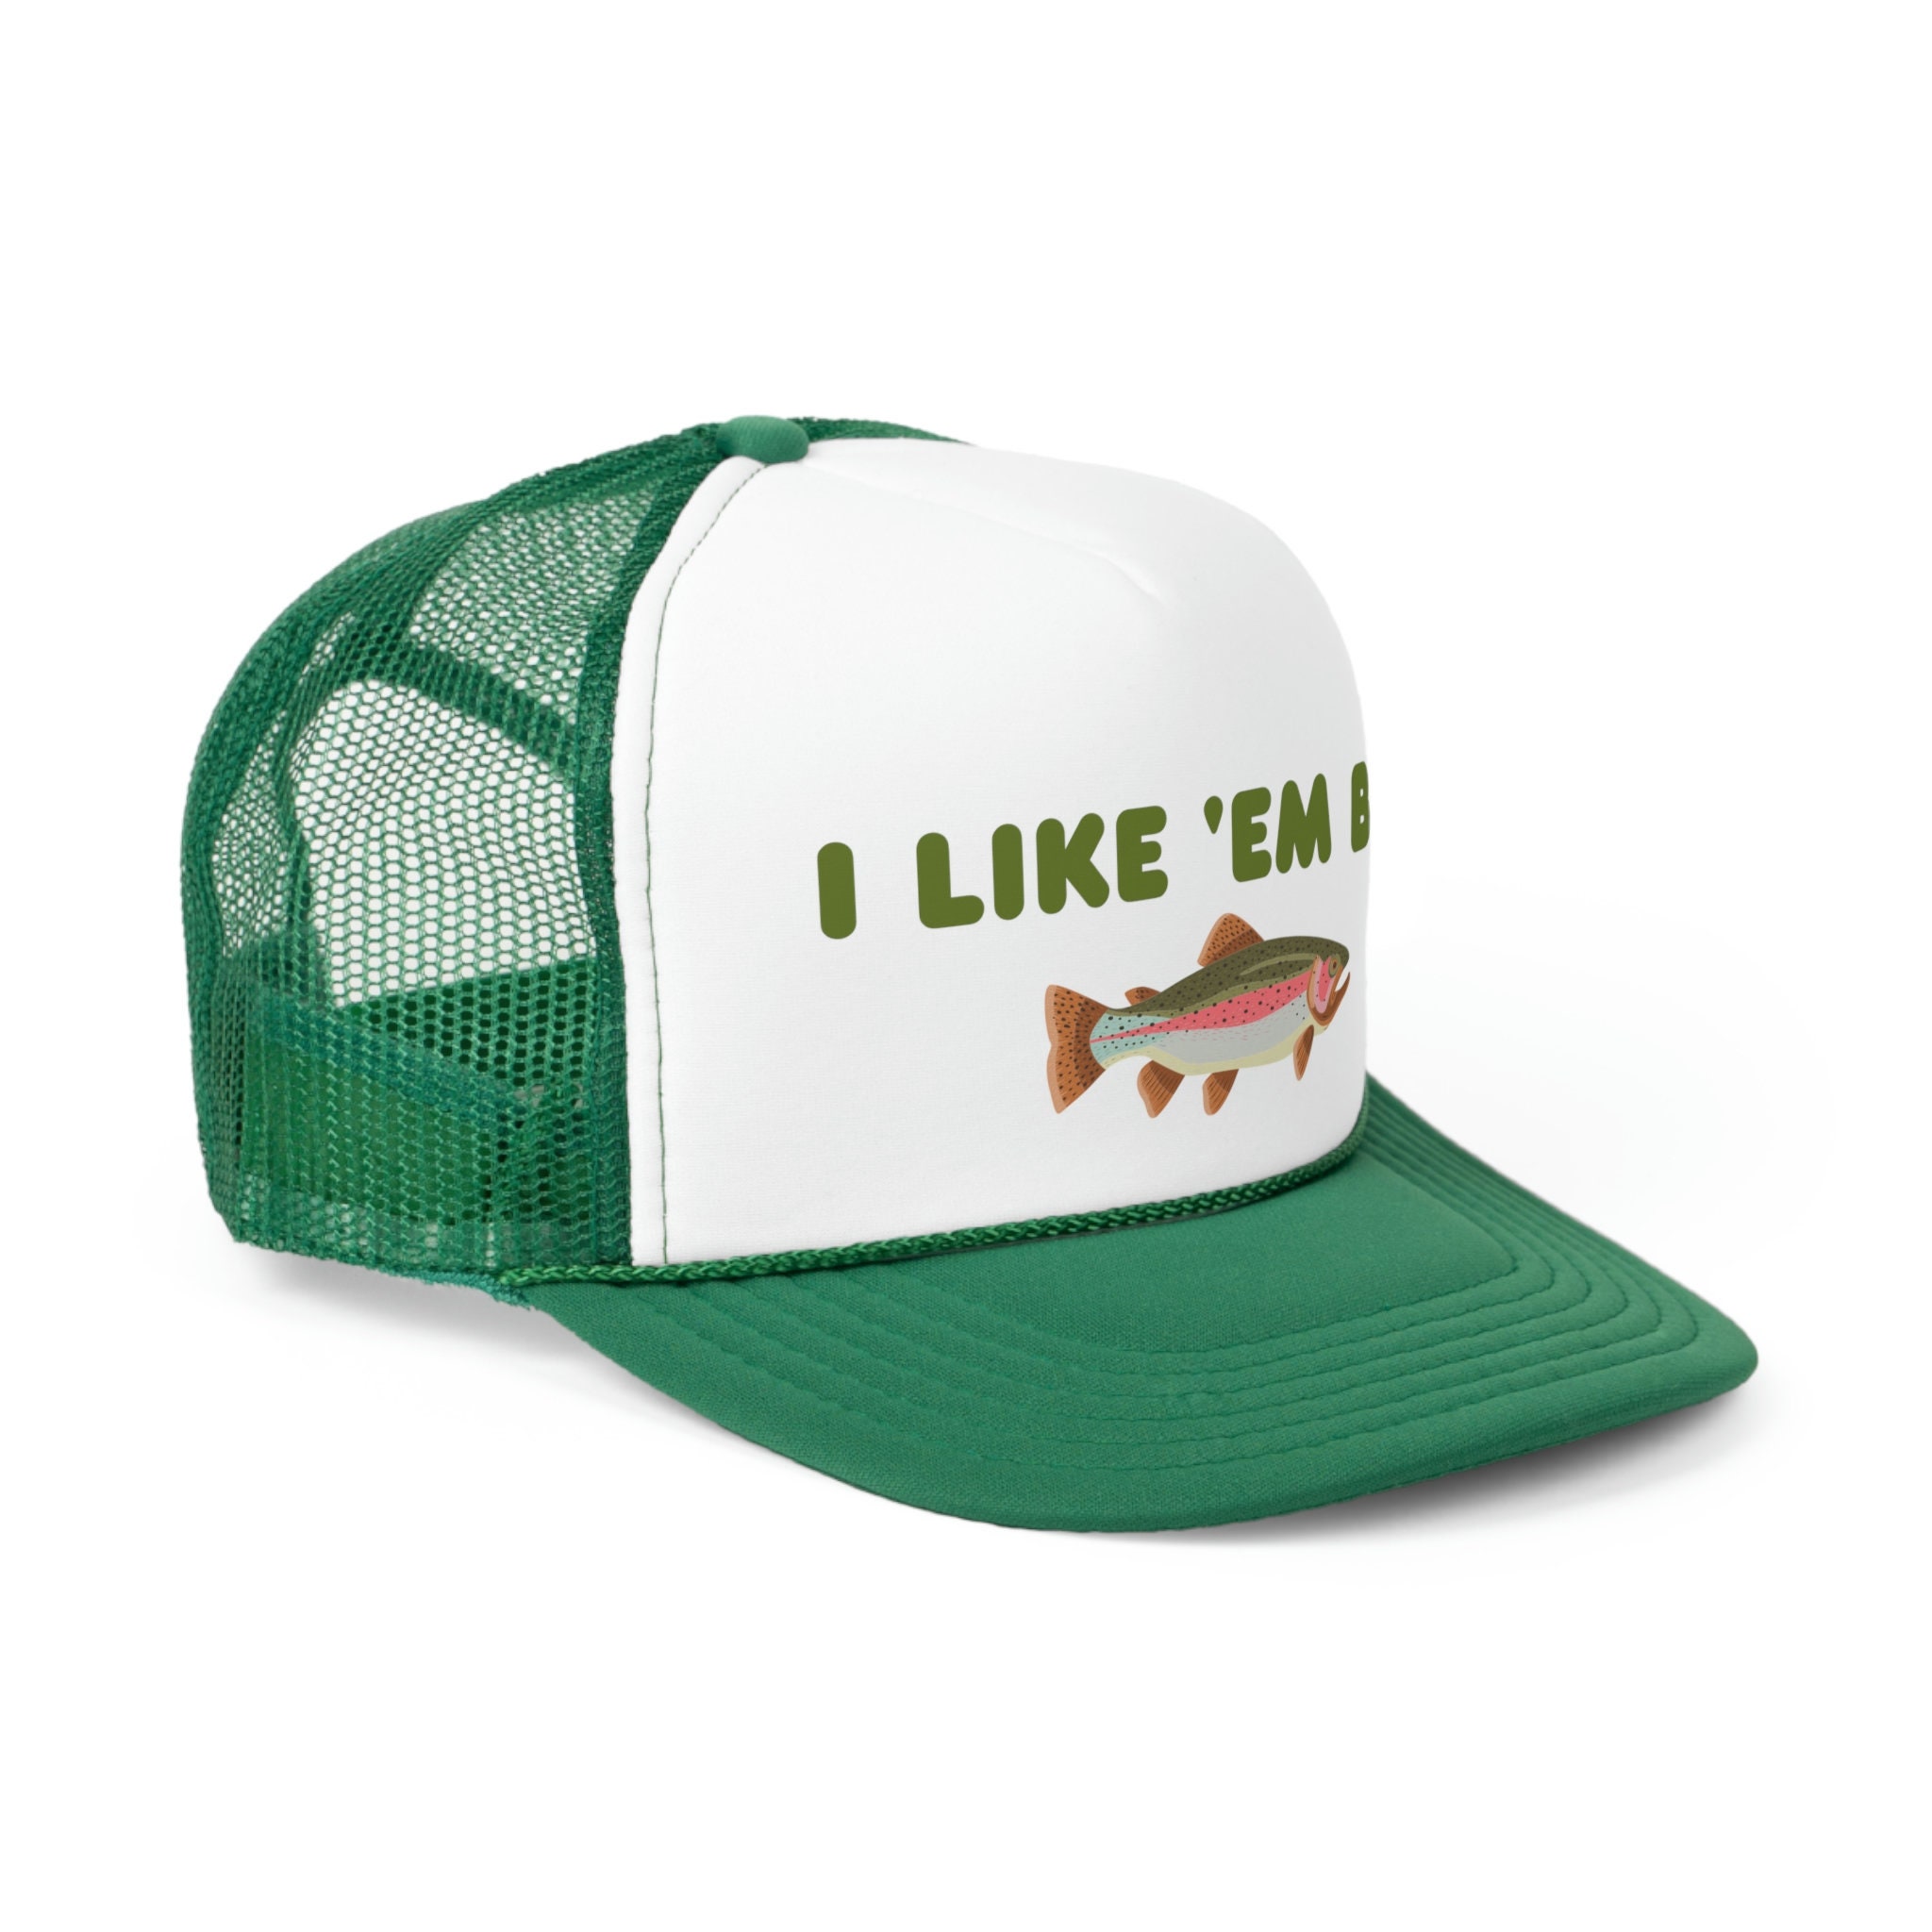  Funny Trucker Hat Size Matters Fishing Baseball Cap